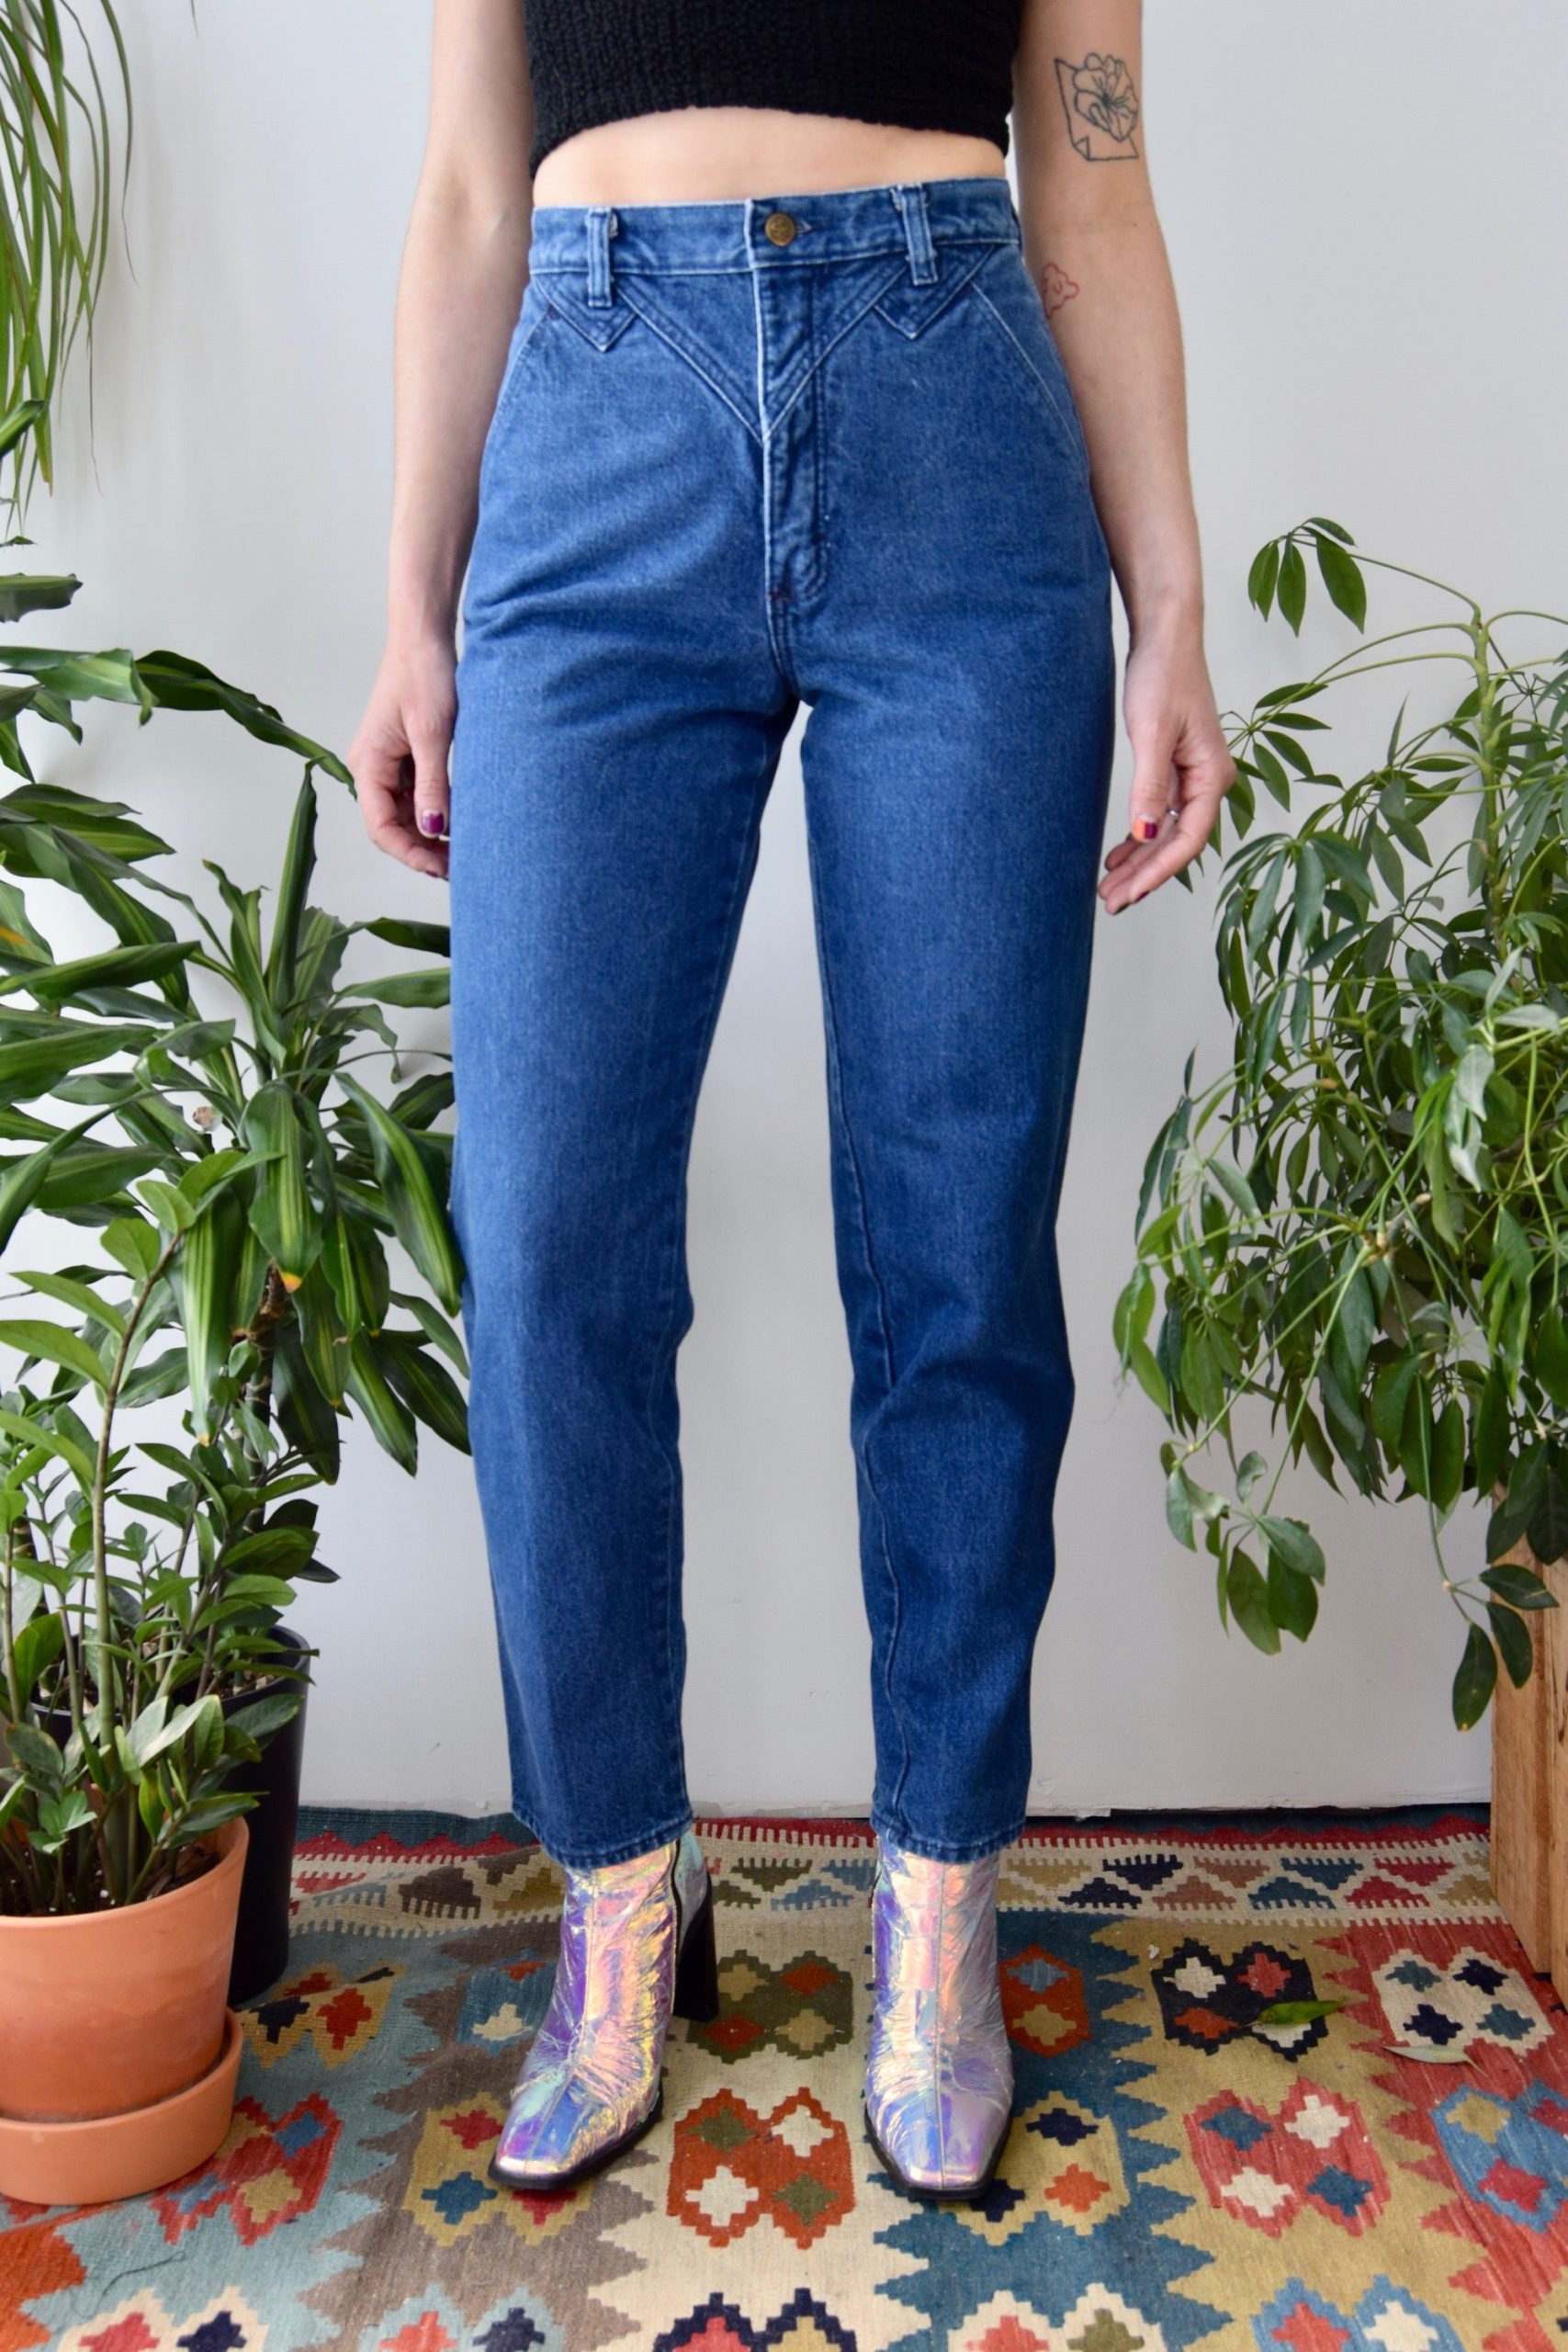 Silverlake jeans: Reinventing Classic Denim for the Wardrobe缩略图